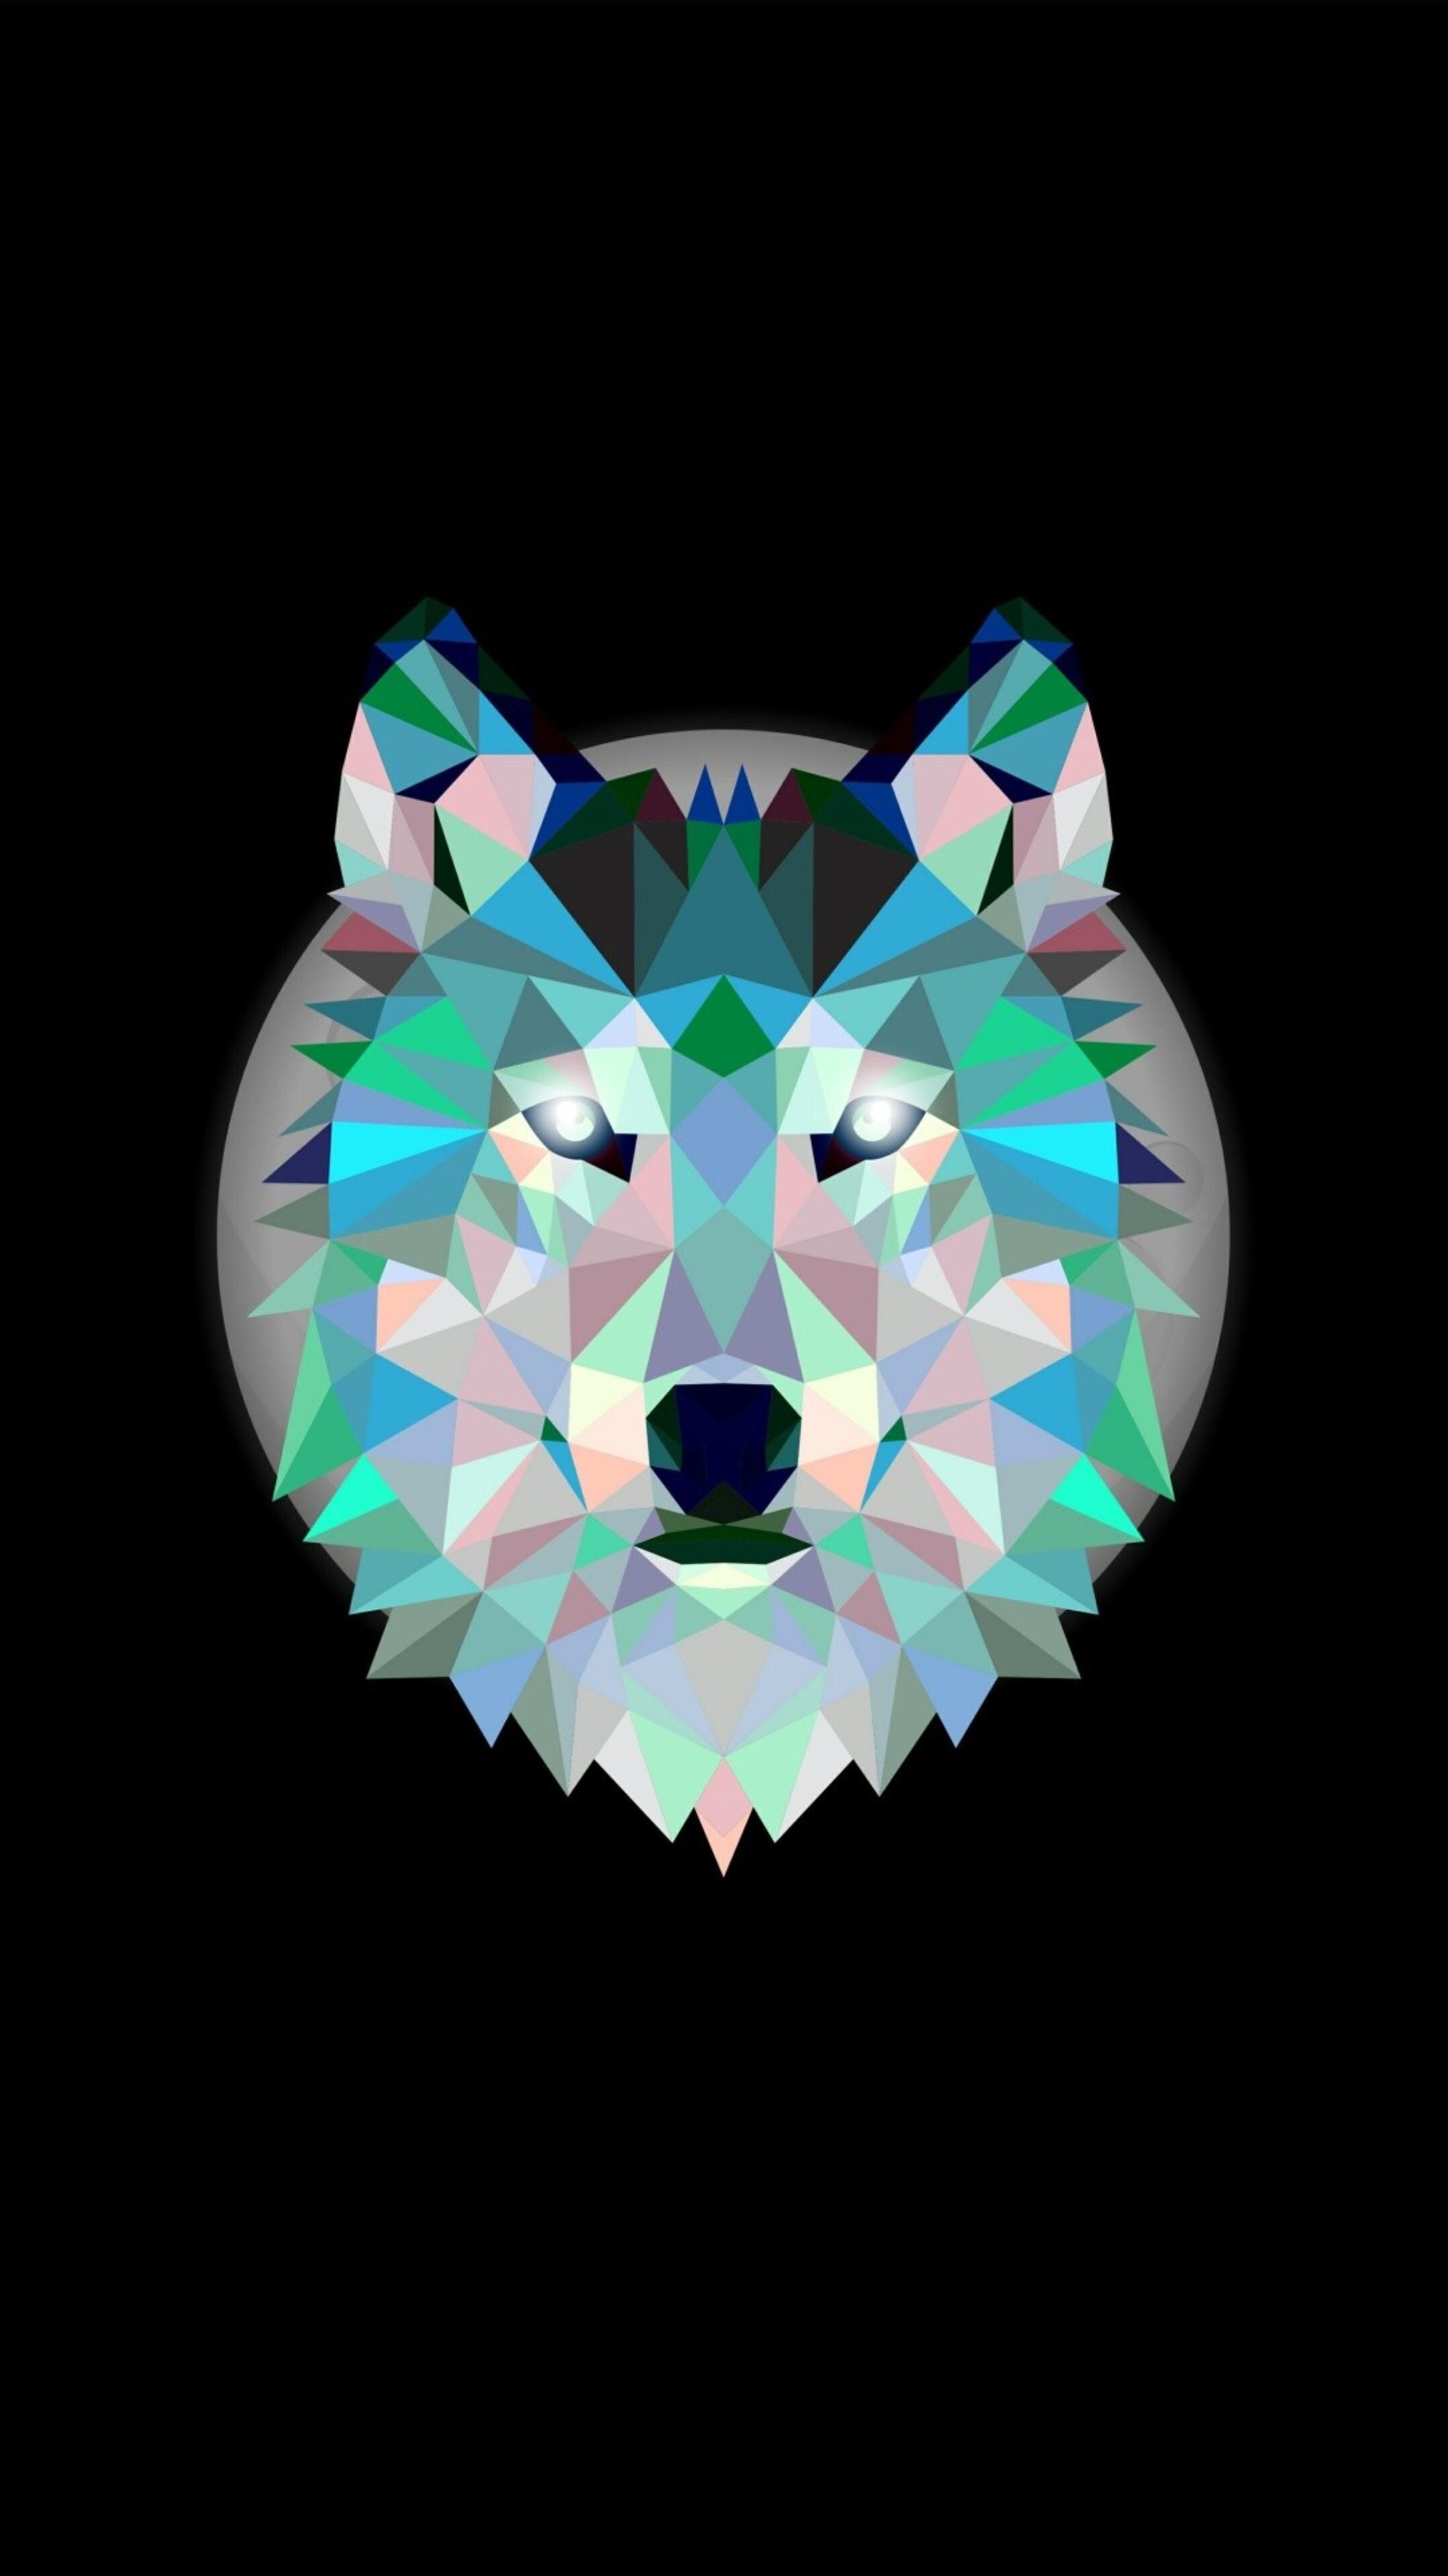 Geometric Animal: Amoled wolf, Colorful abstract polygonal wolf head, Polygonal style. 2160x3840 HD Wallpaper.